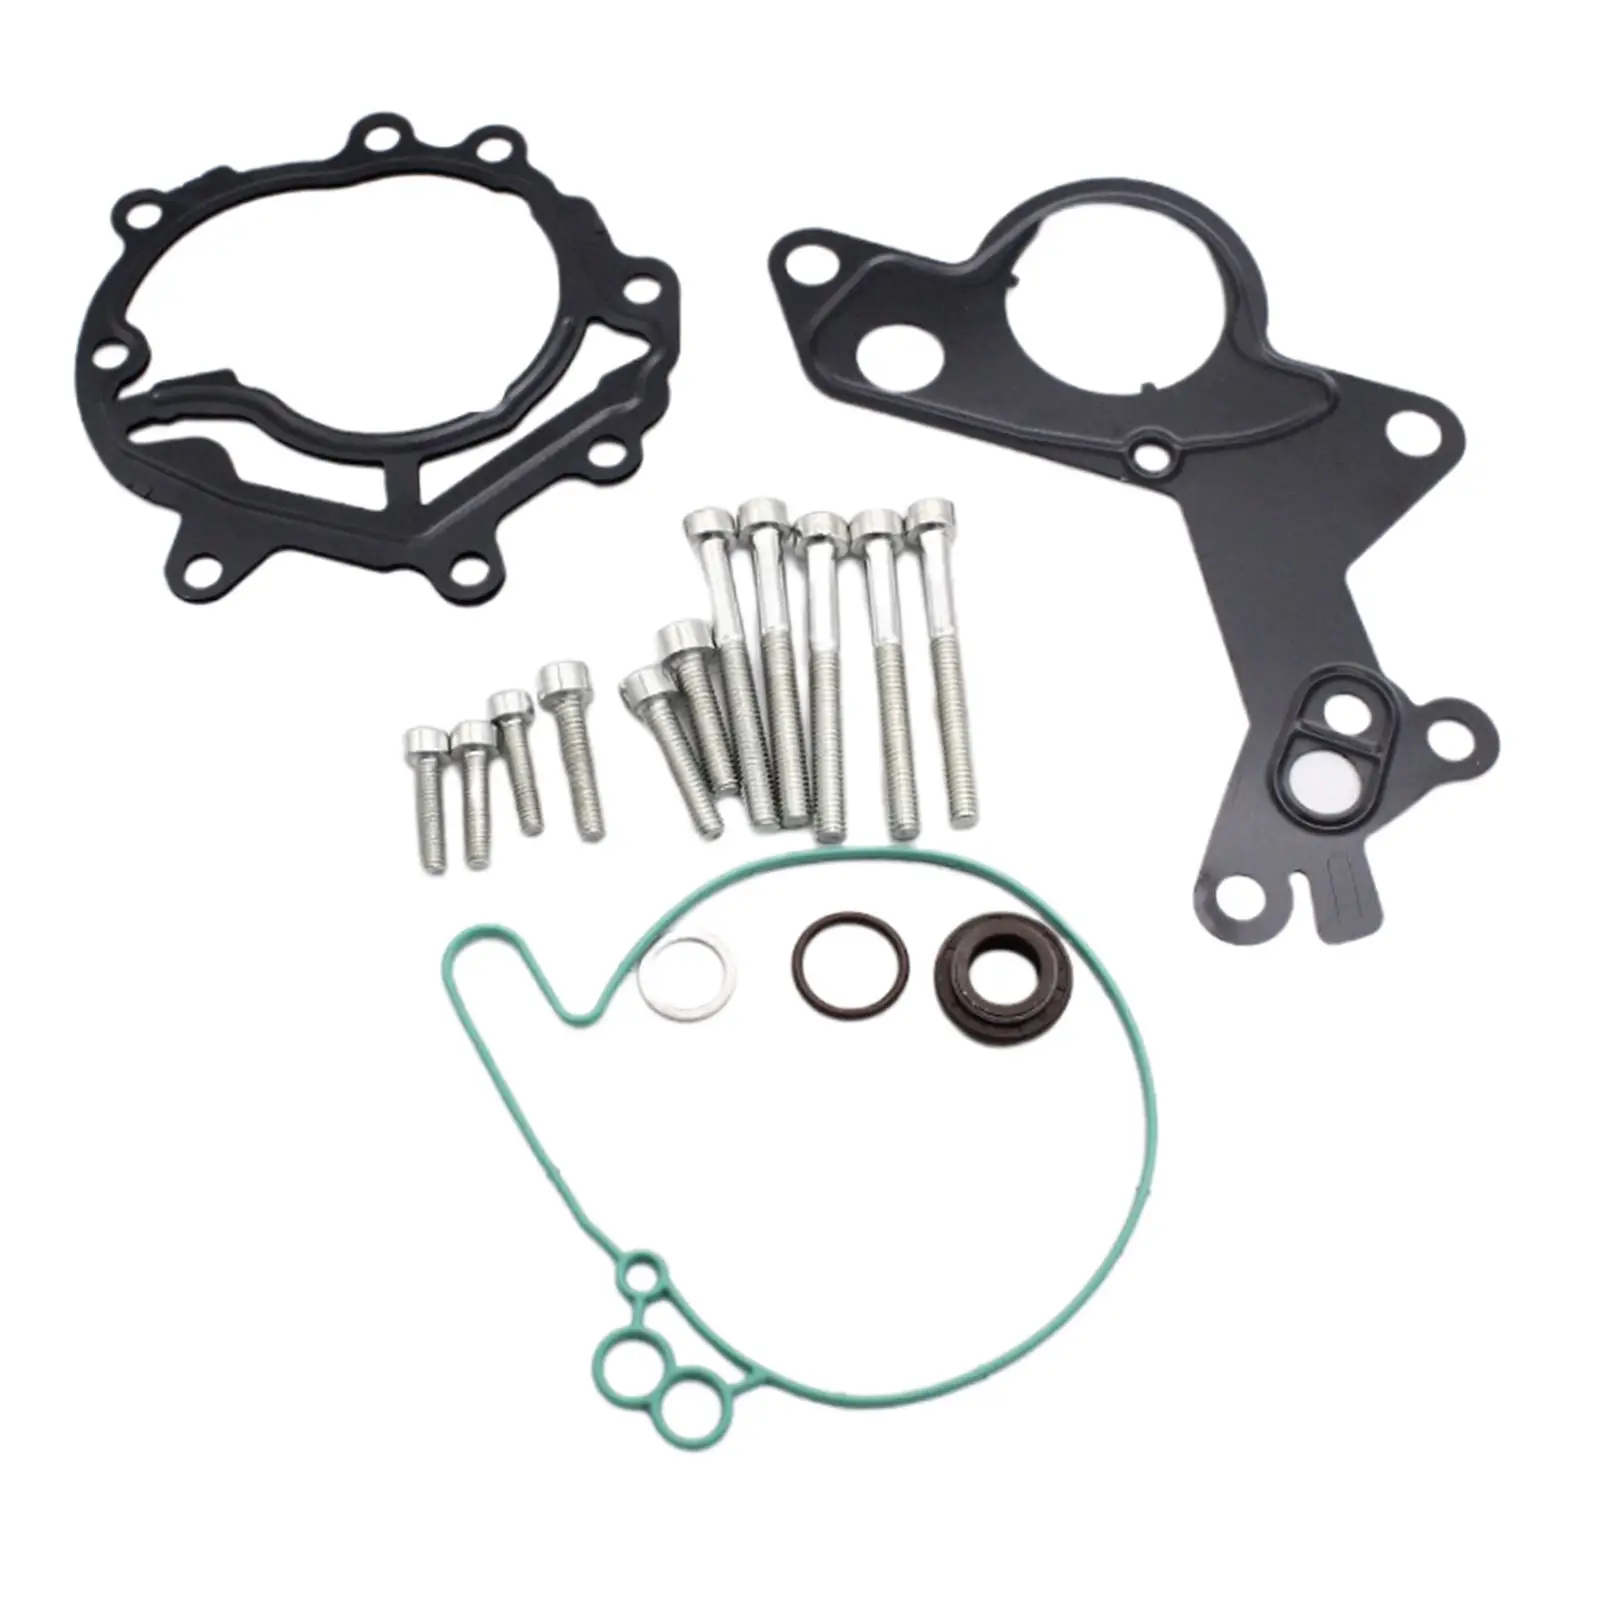 Vacuum Fuel Tandem Pump Repair Kit for VW Car Accessories 038145209 for Audi A2 A3 A4 A6 for Skoda